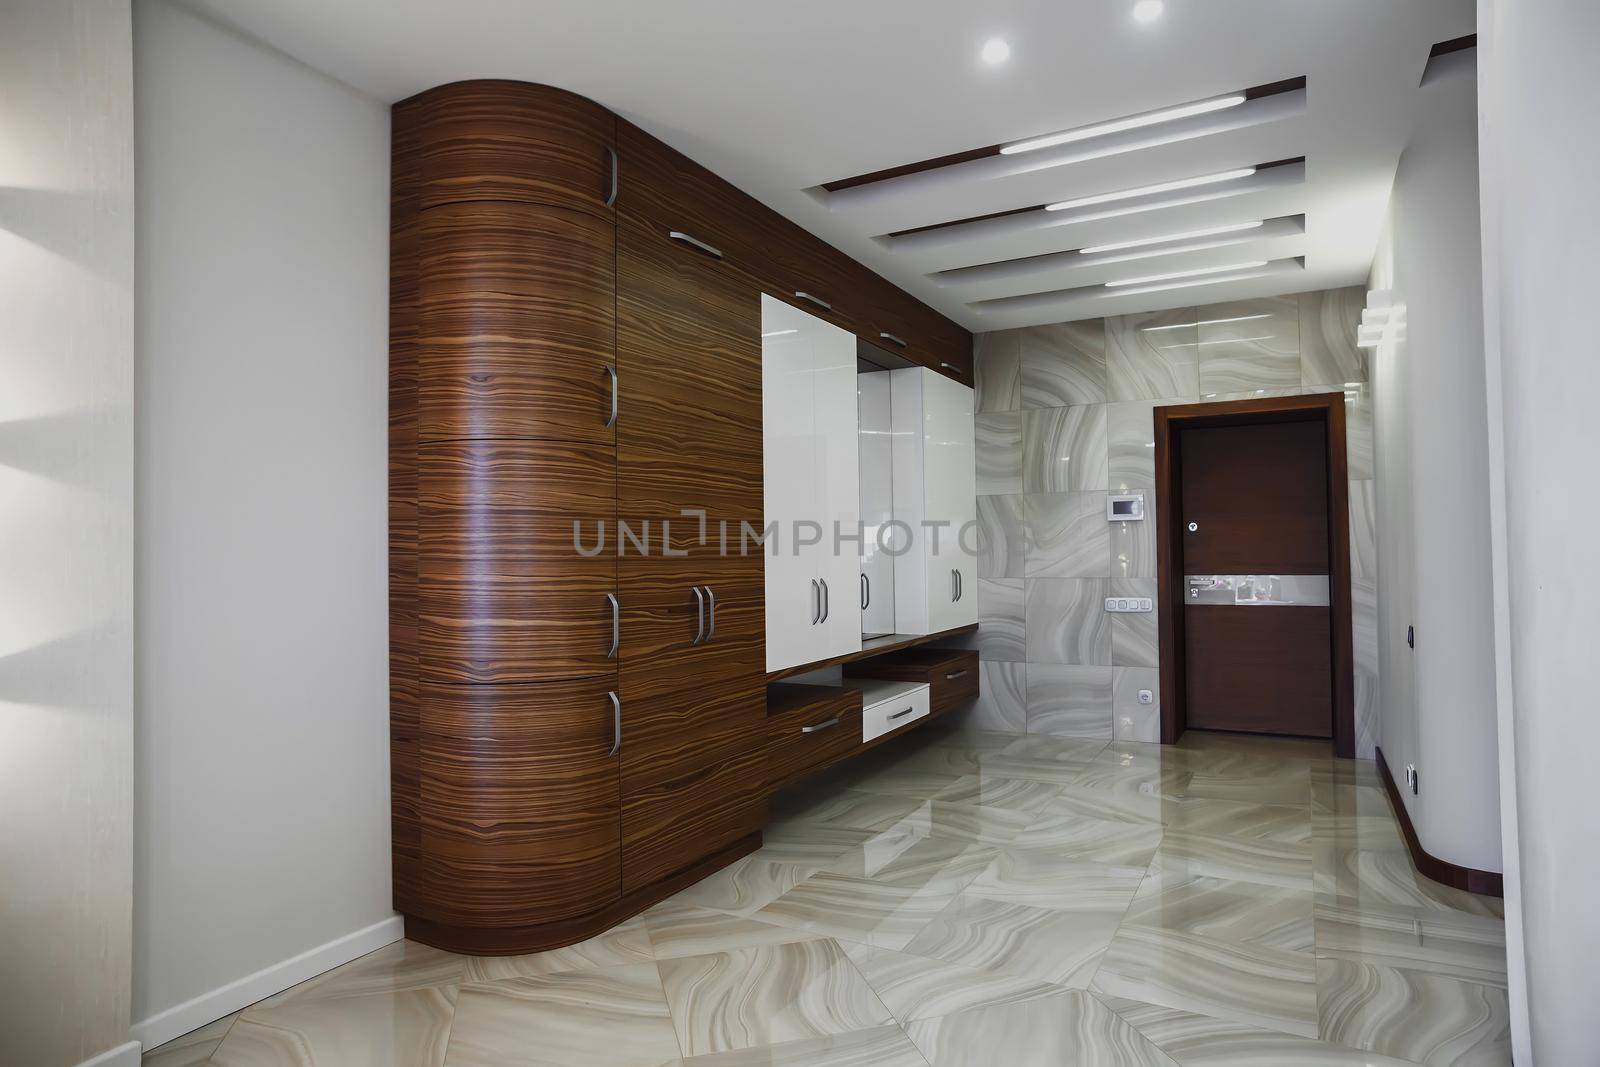 Wooden cabinet in modern hallway interior with luxury marble floor